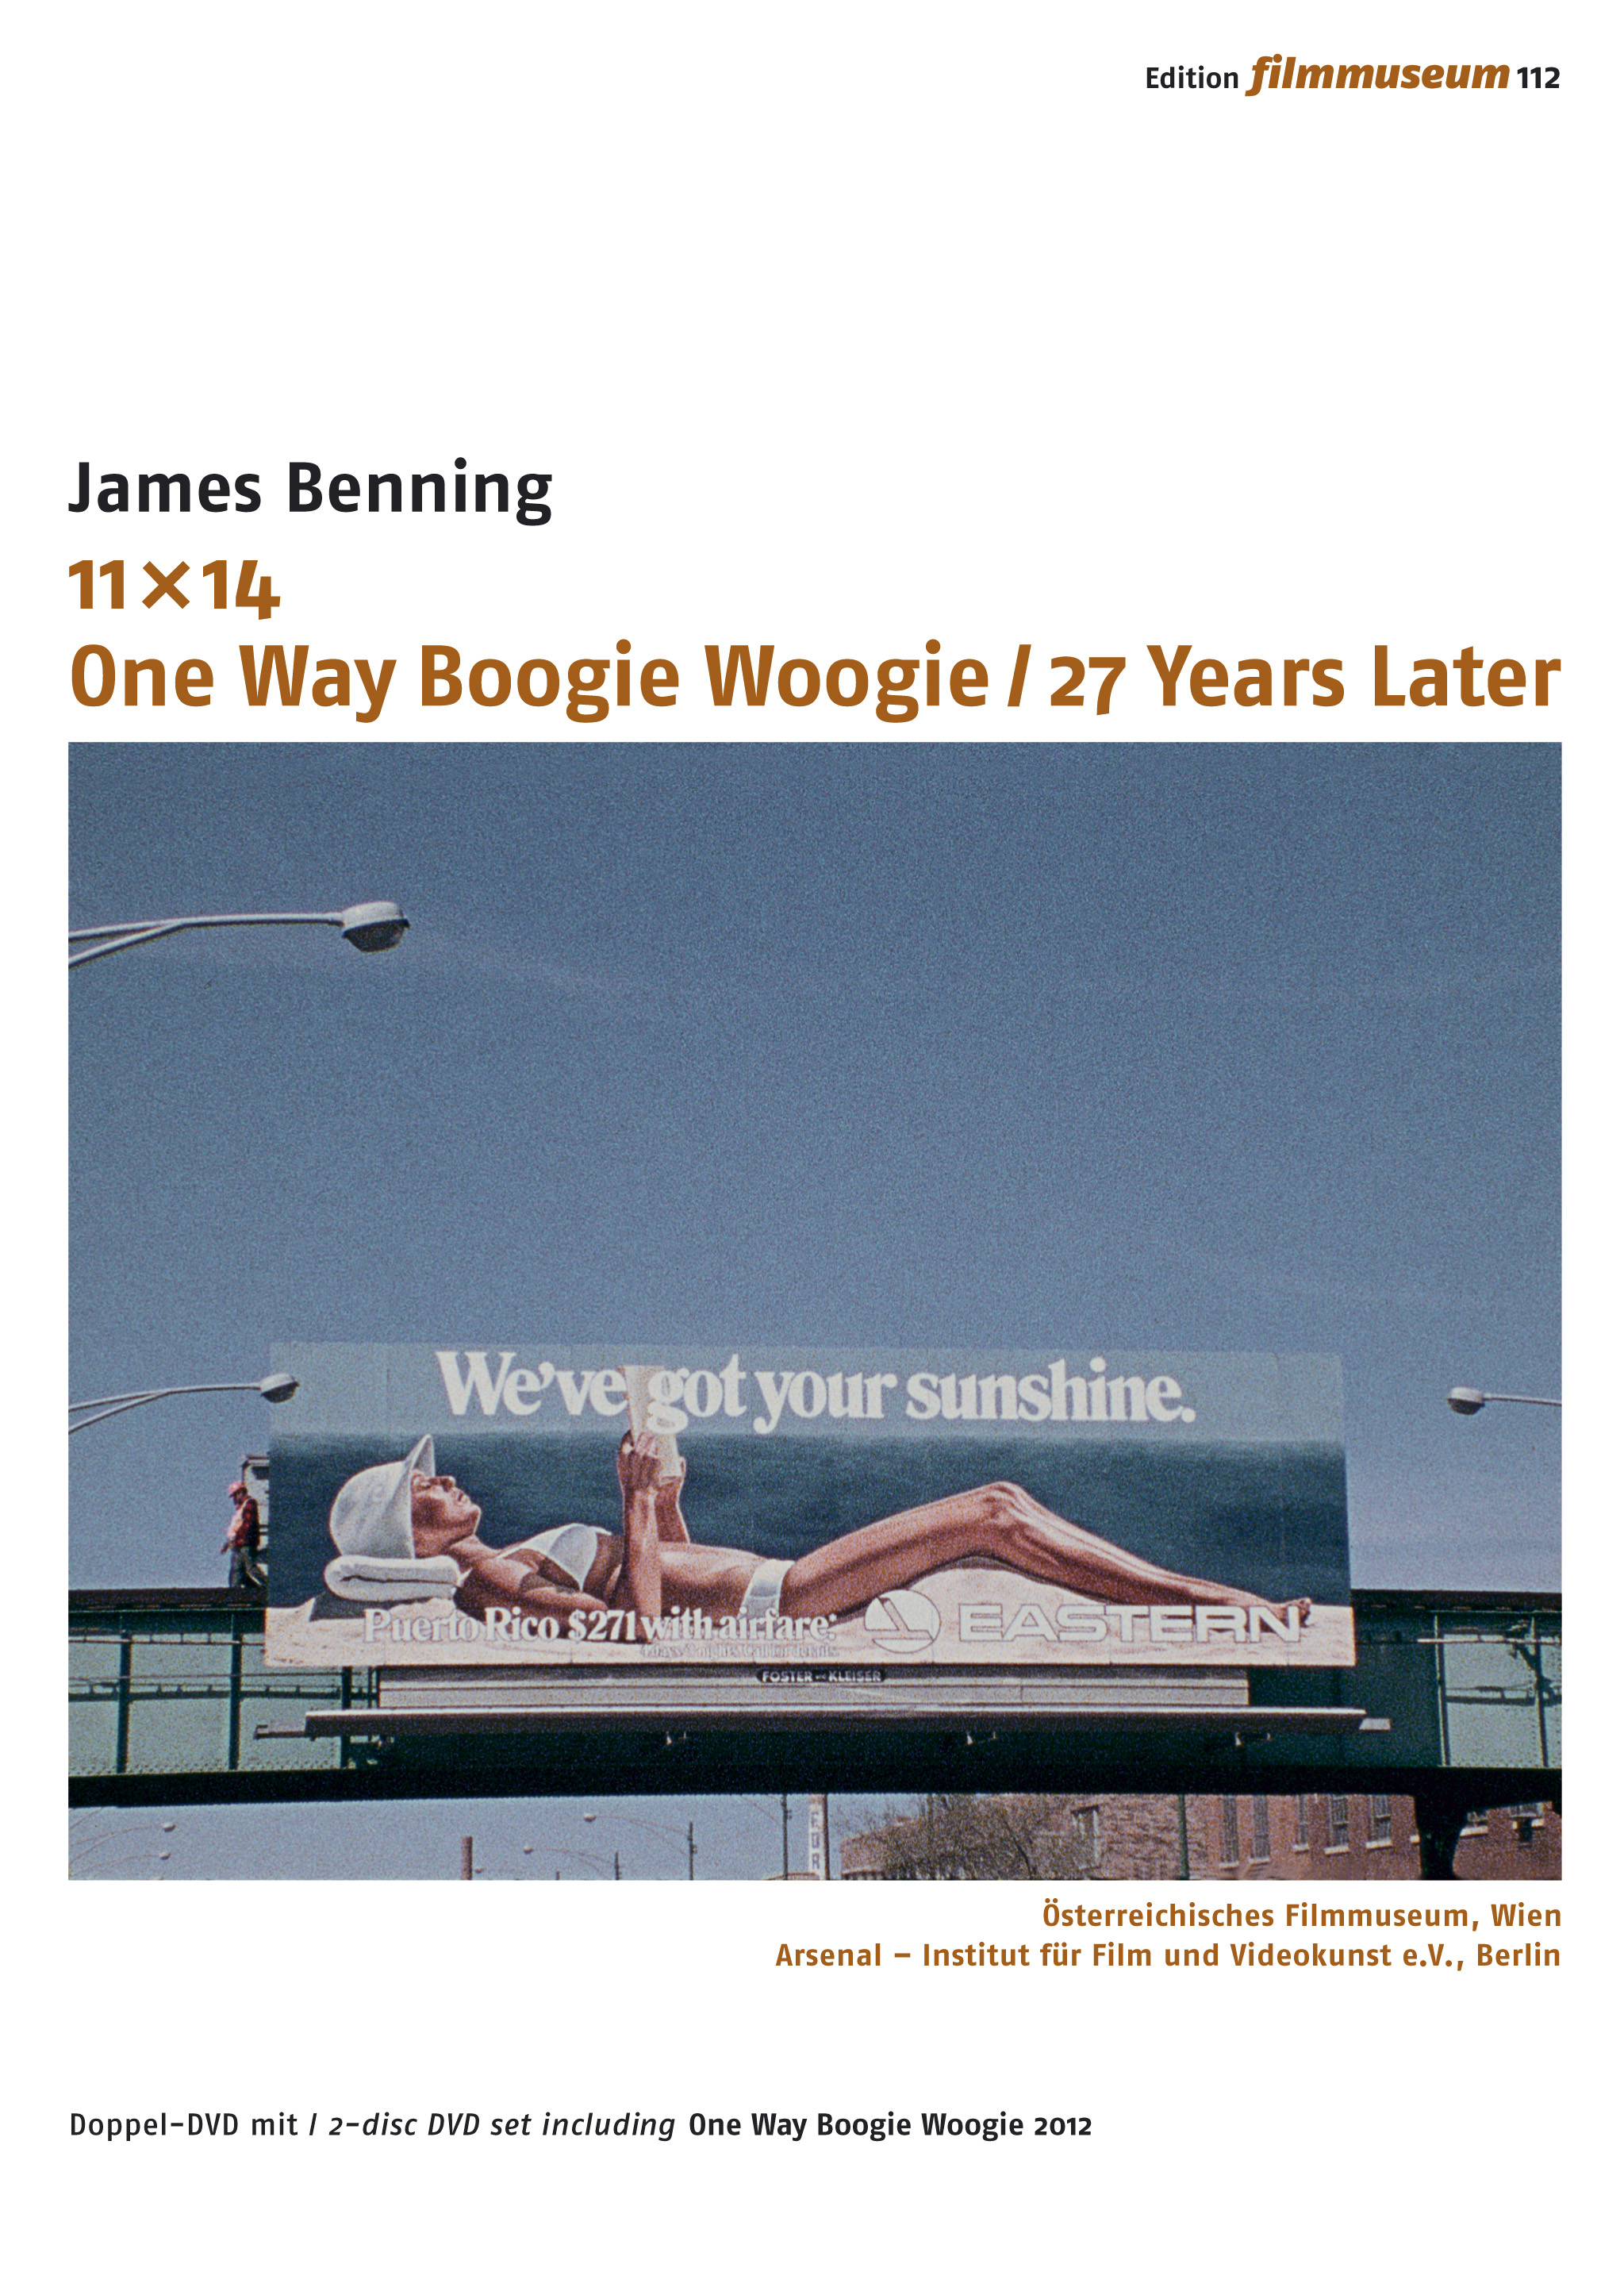 One Way Boogie Woogie/27 Years Later (2005) Screenshot 4